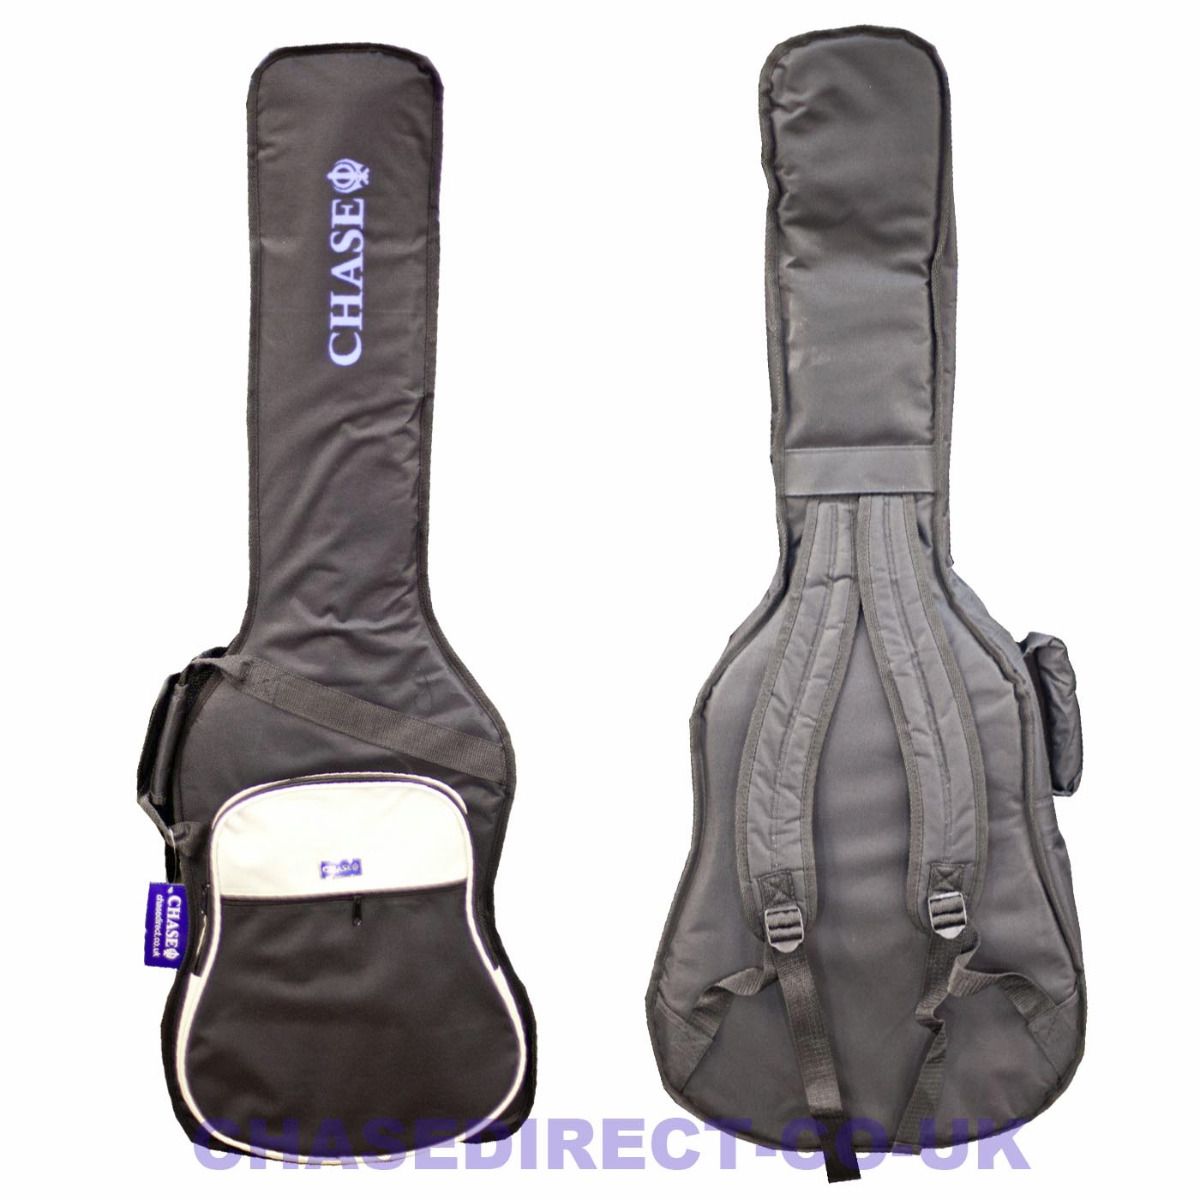 Chase Premium Electric Guitar Gig Bag Case with Shoulder Straps 10mm Padding